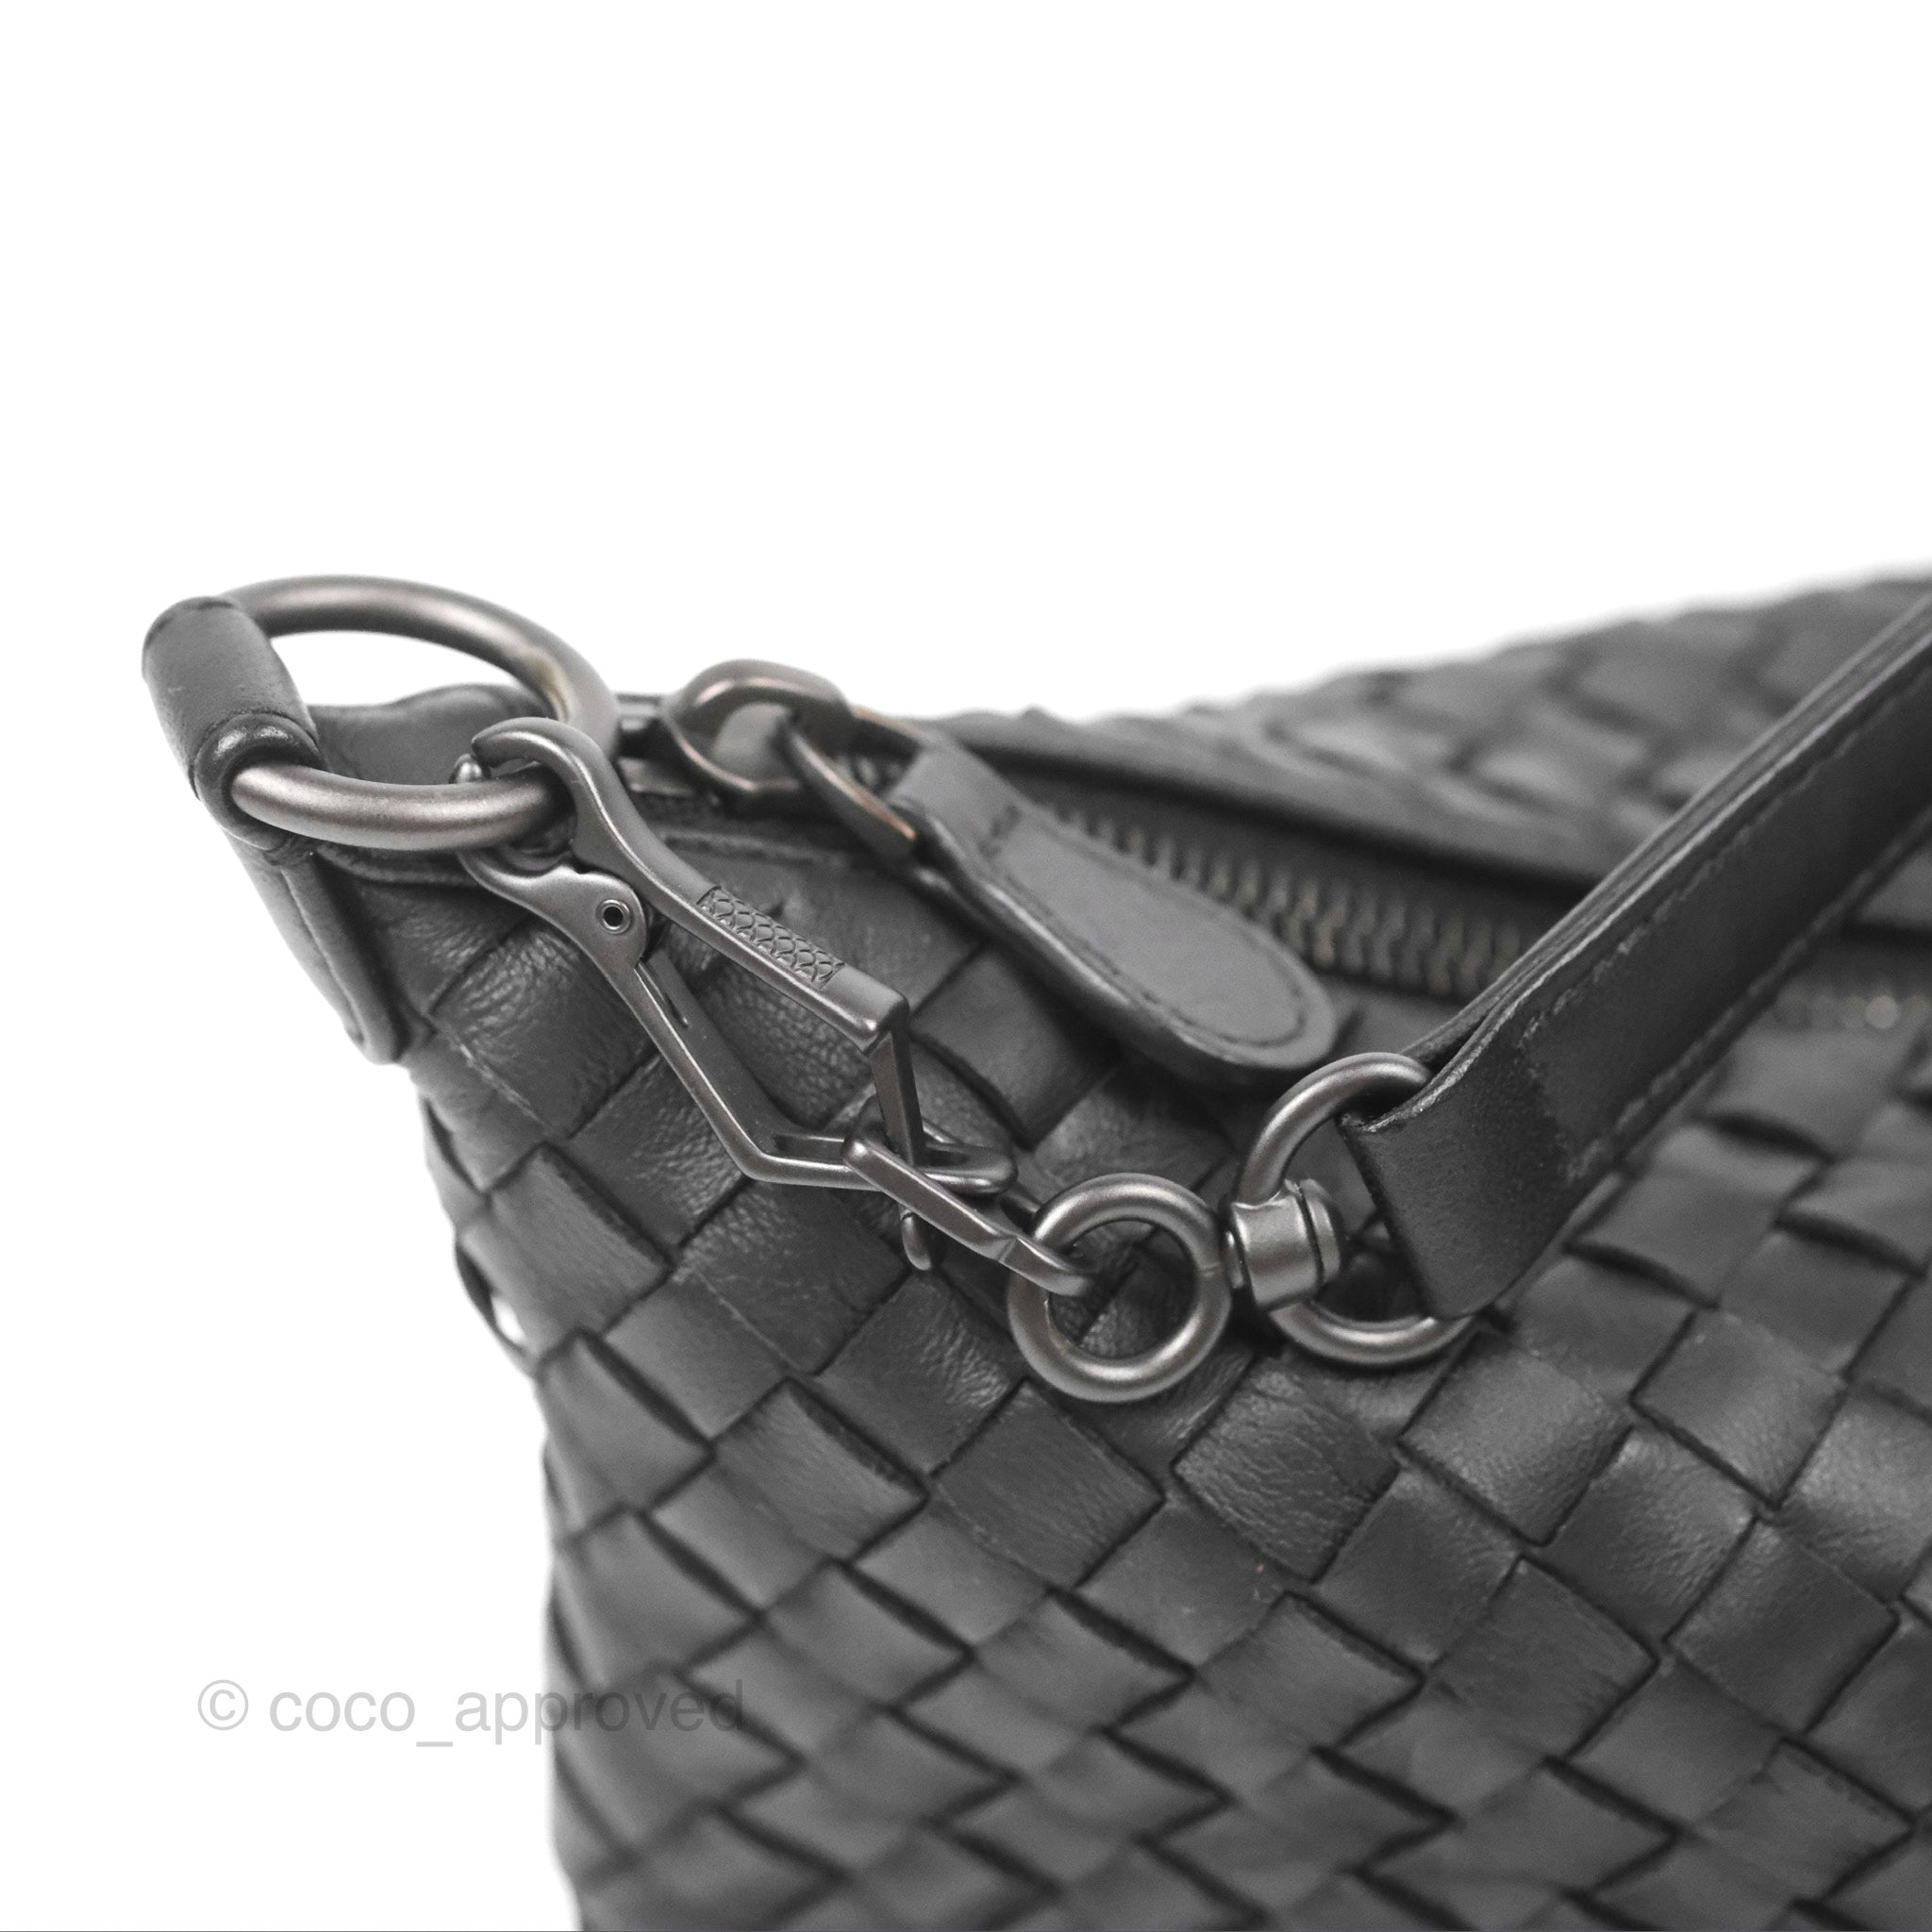 Bottega Veneta Shoulder Bag Black Nappa Intrecciato – Coco